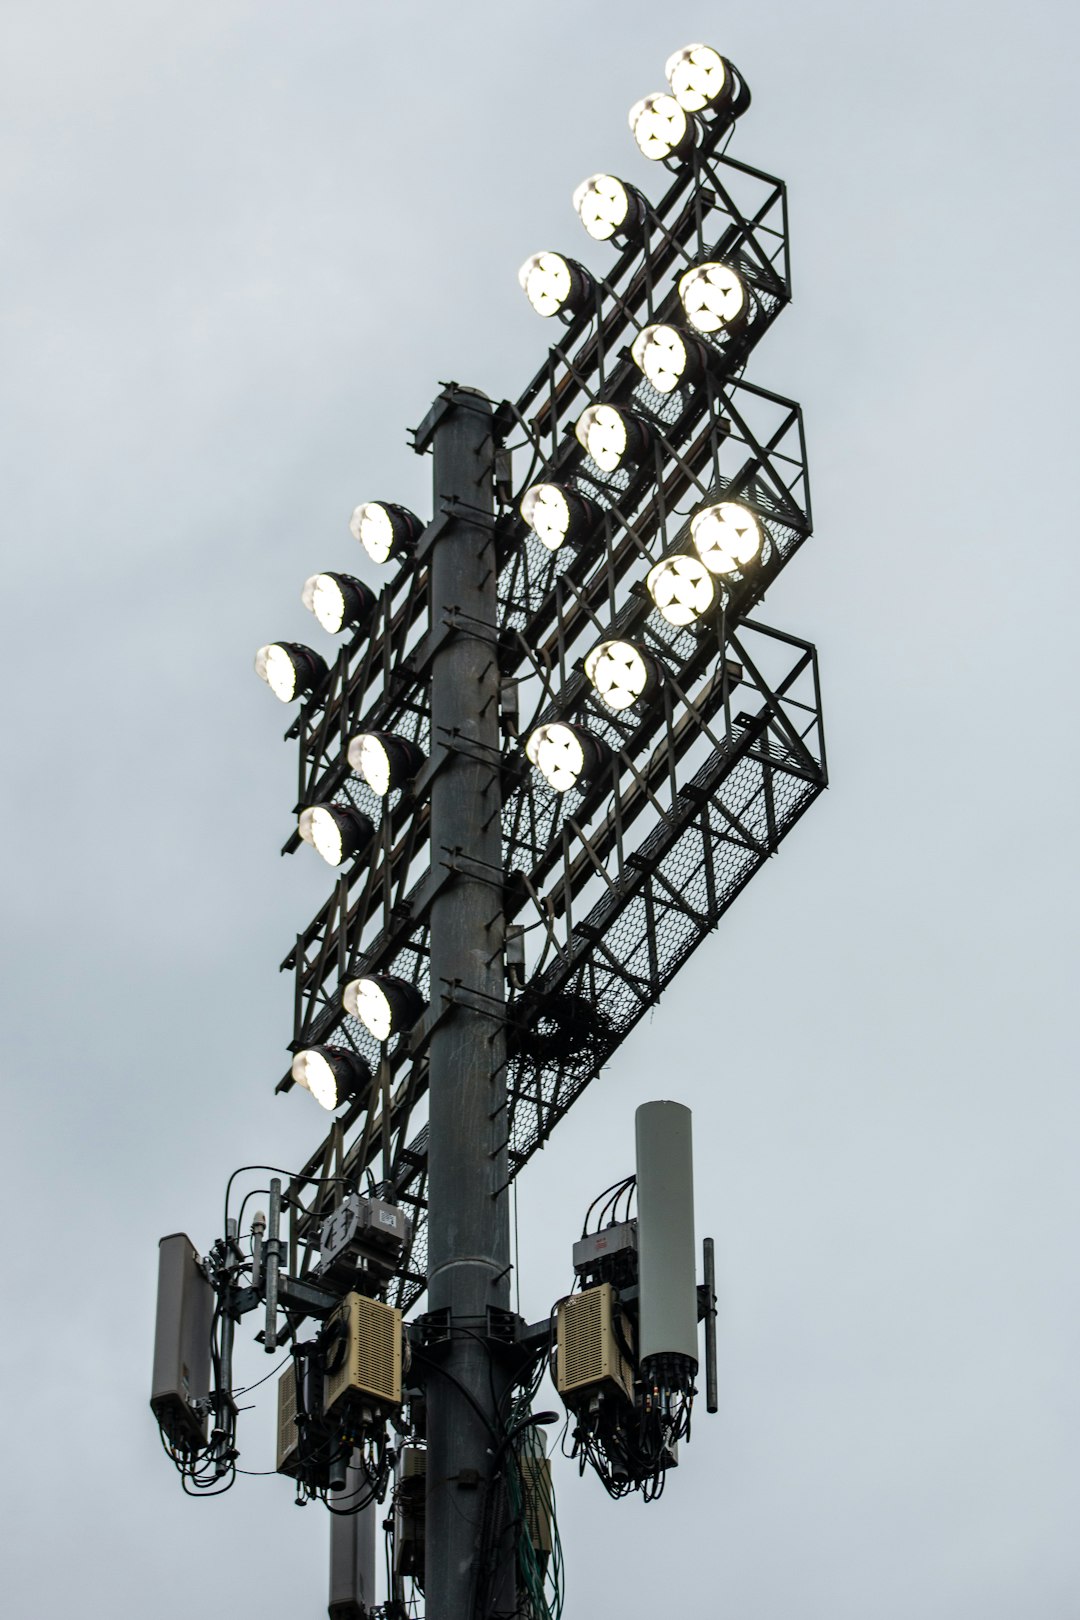 gray stadium lights turned-on